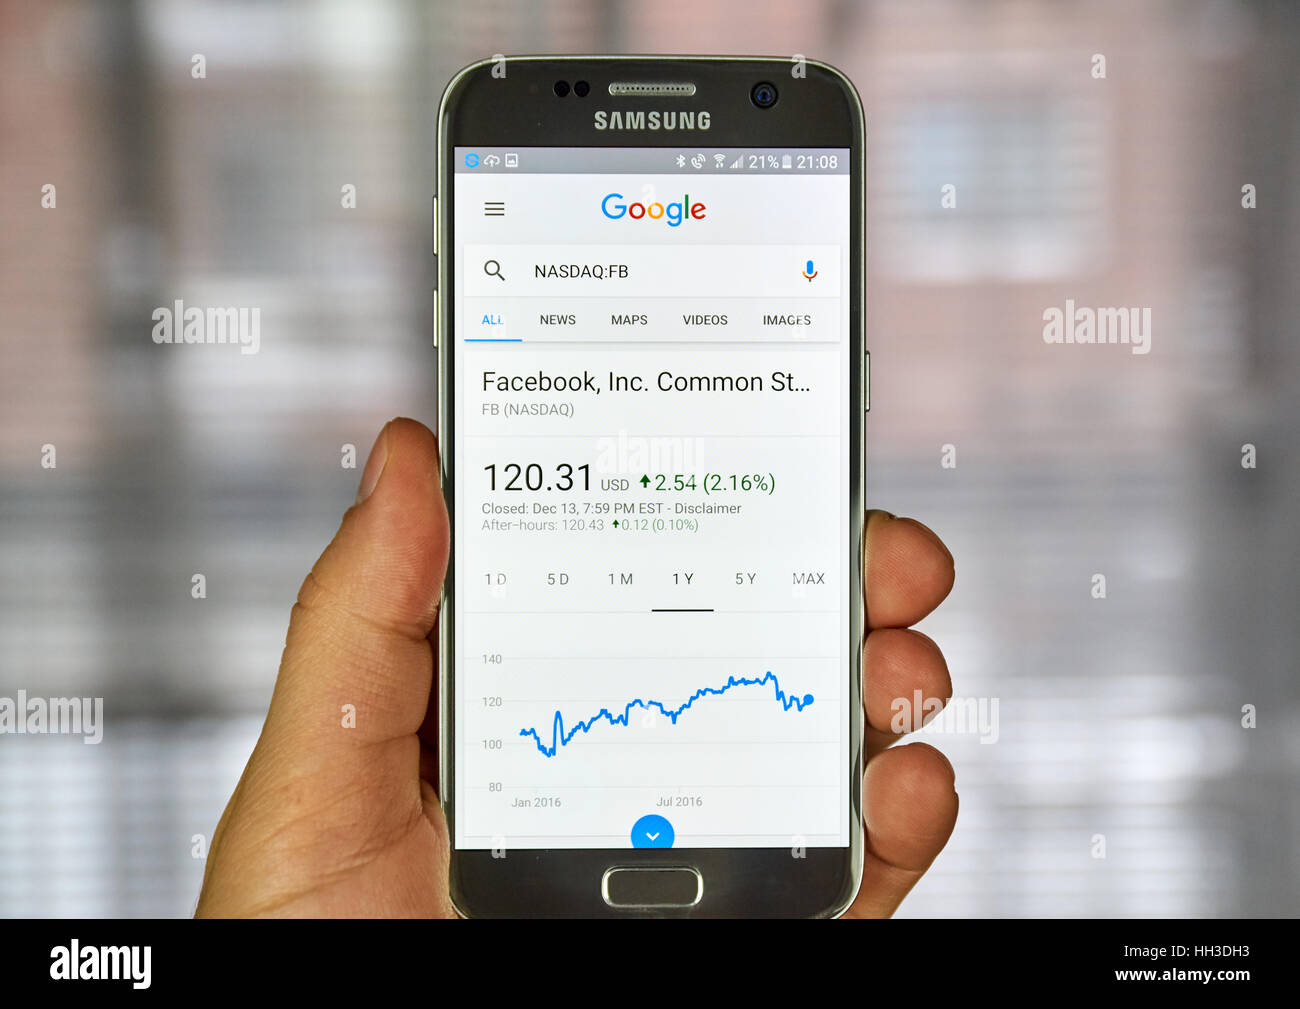 Samsung Stock Chart